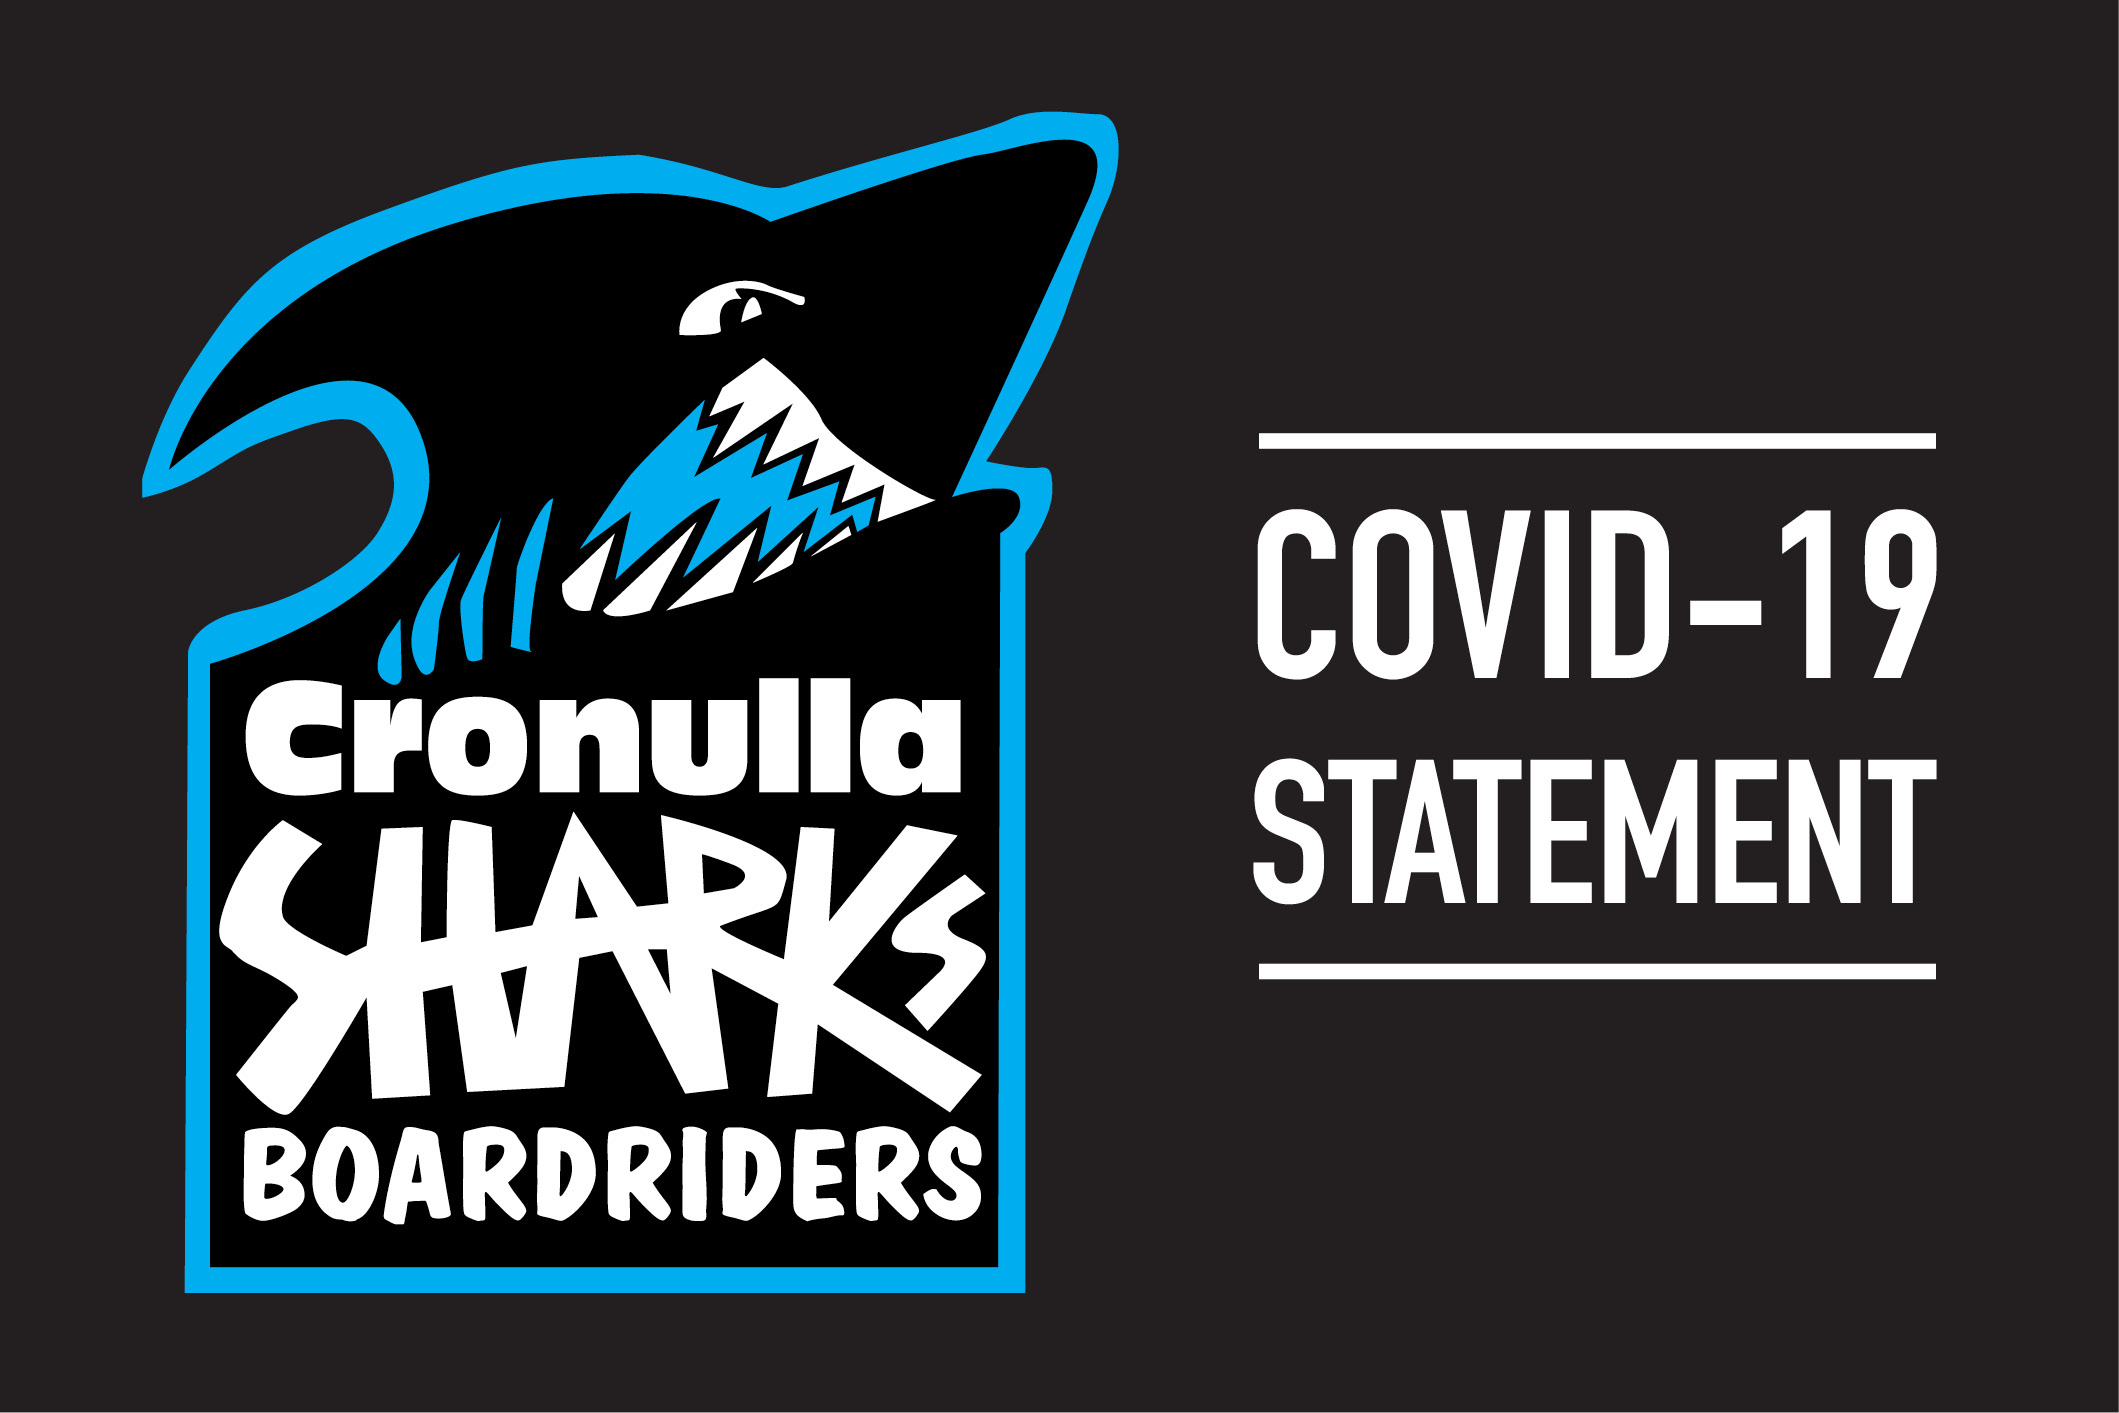 Cronulla Sharks Boardriders COVID-19